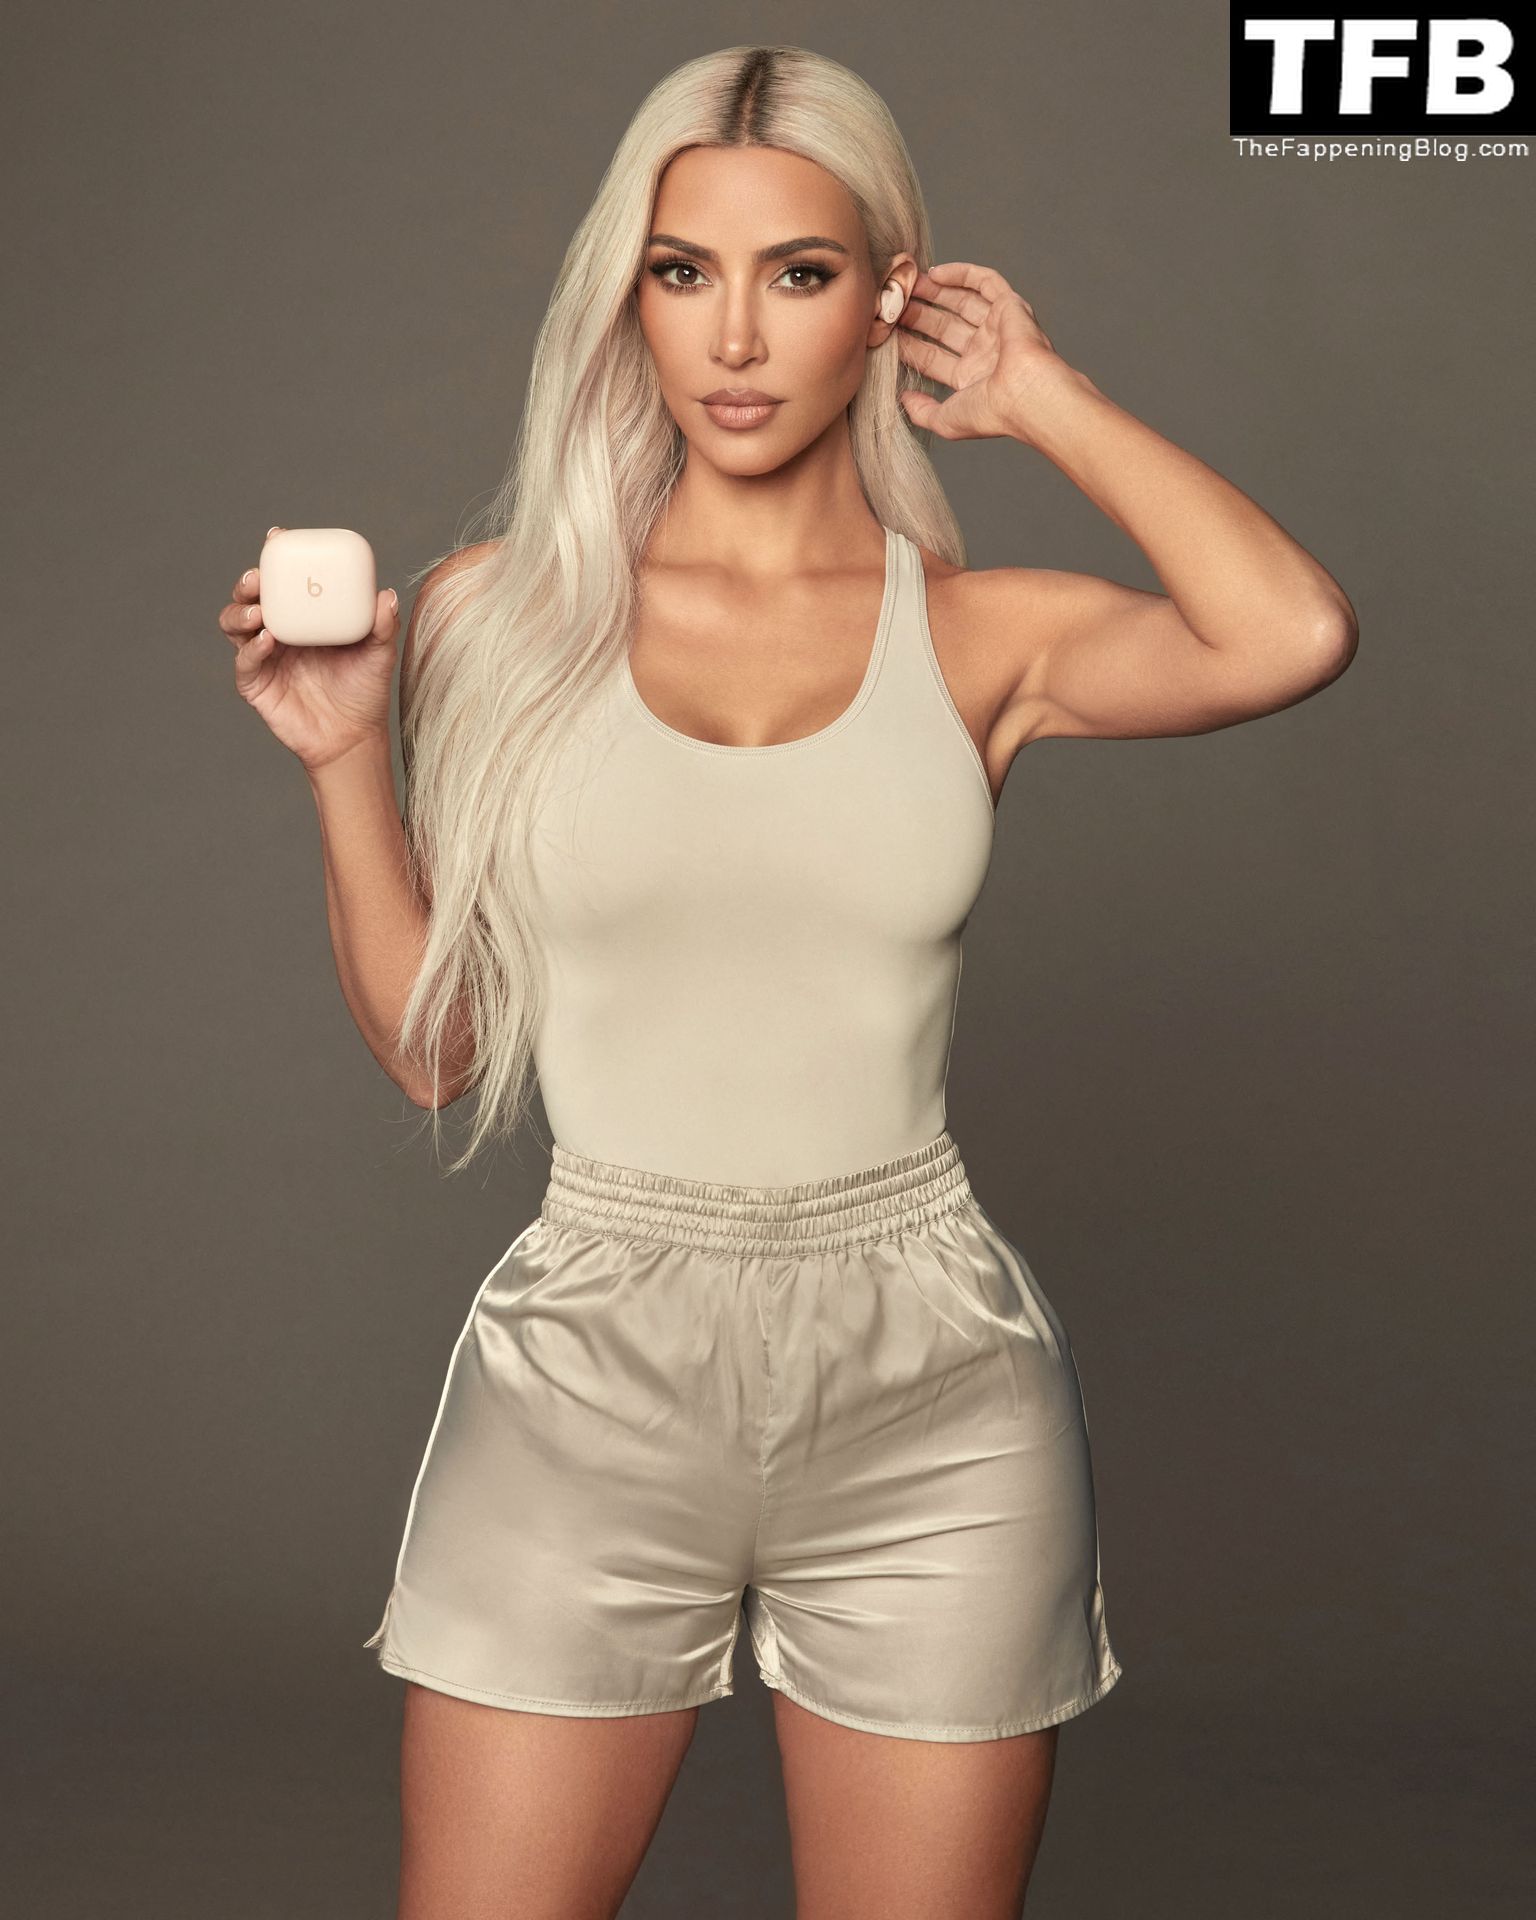 Kim Kardashian Sexy The Fappening Blog 7 - Kim Kardashian Promotes “Beats x Kim” Wireless Airbuds in a Sexy Shoot (9 Photos)